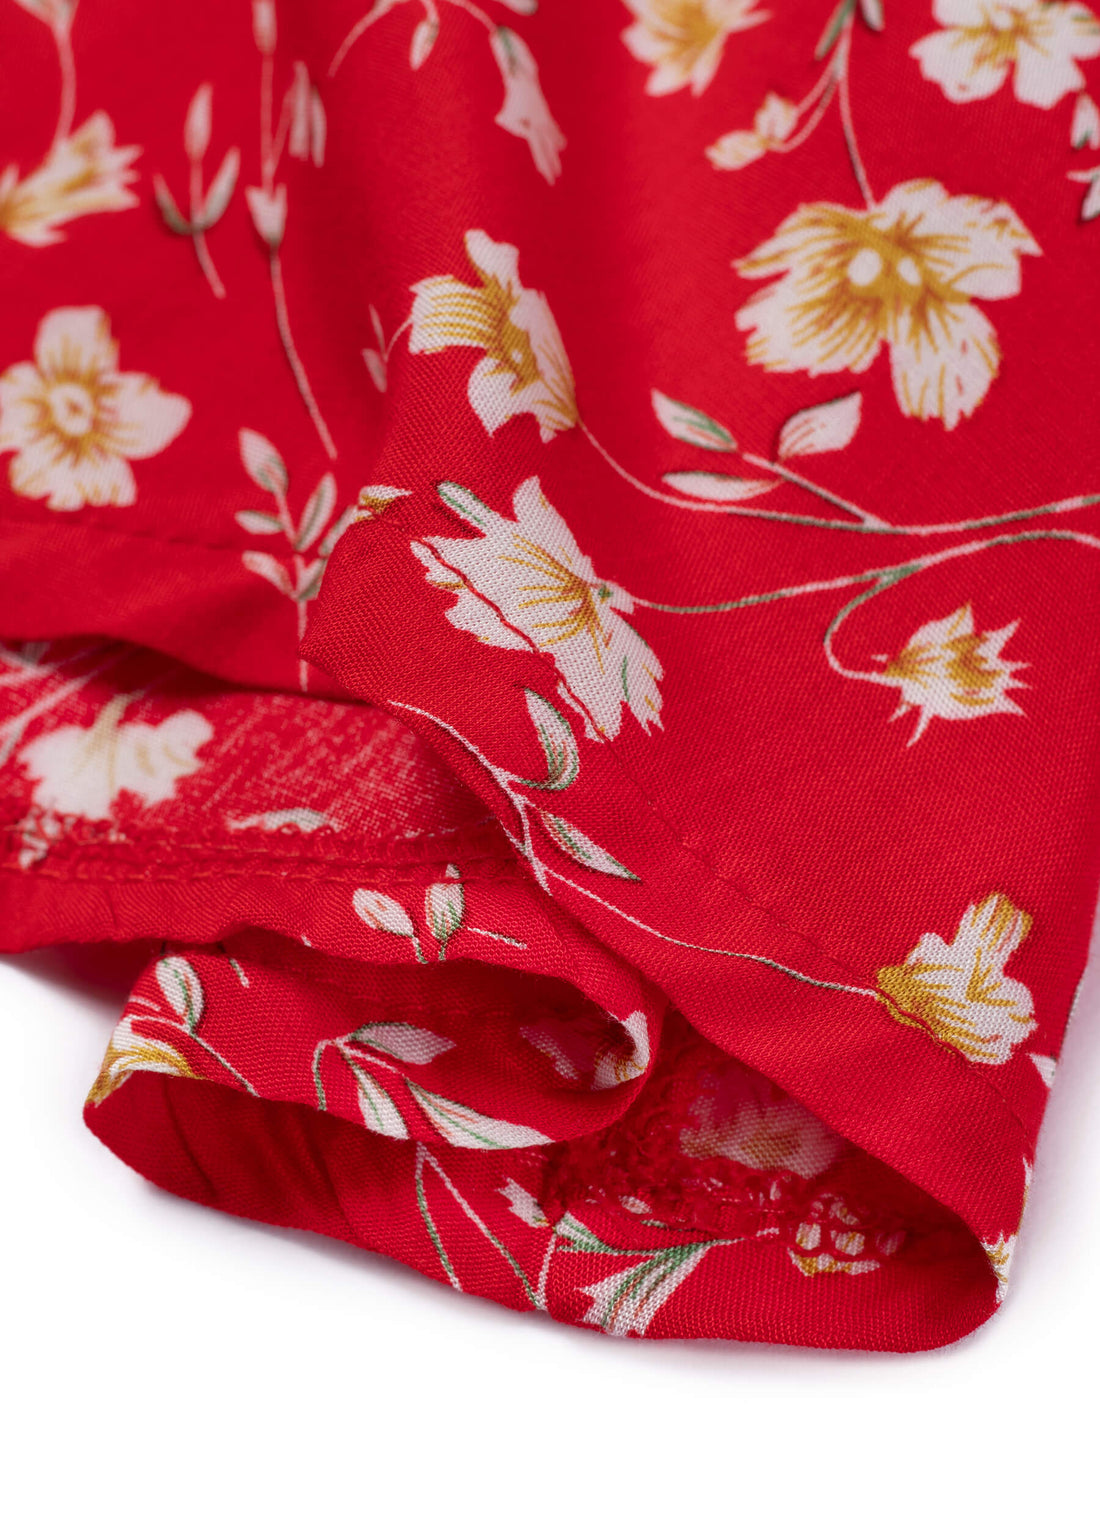 MECALA Women's Ditsy Floral Print Short Sleeve Drawstring Waist Pleated Dress